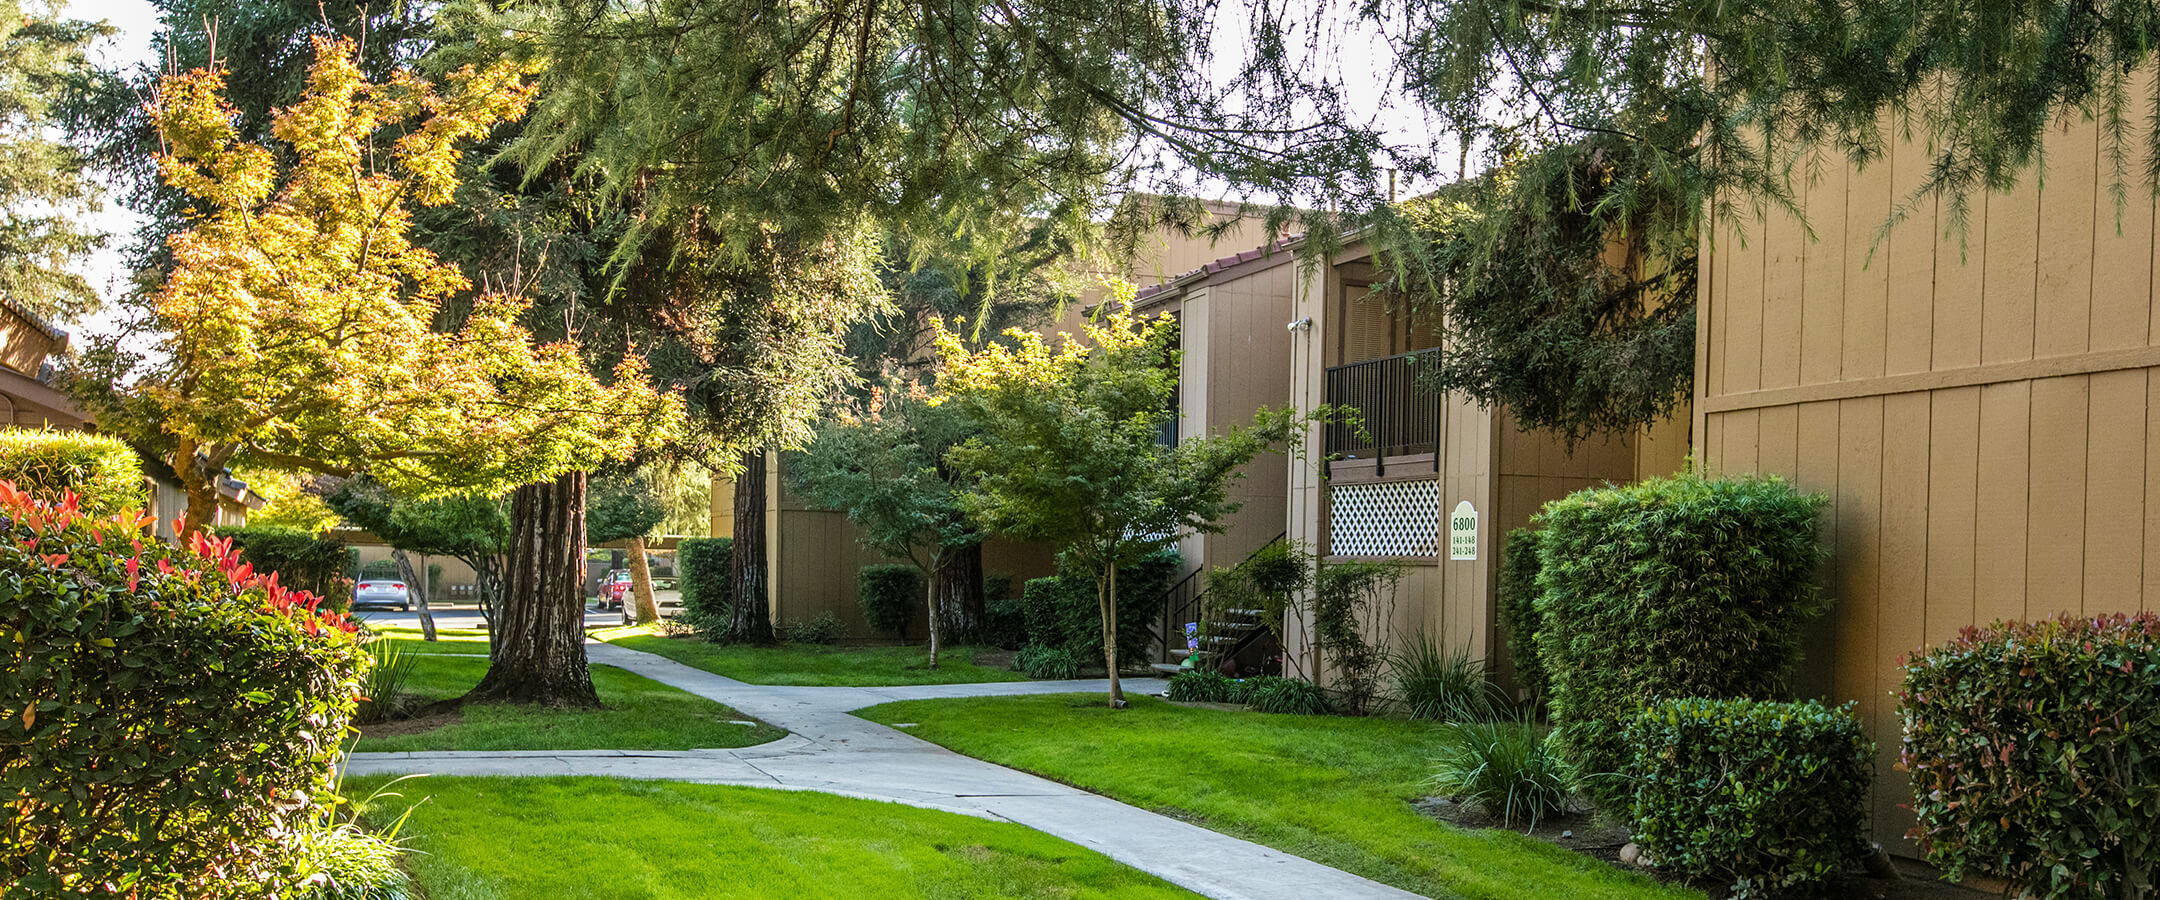 Pine Tree Village Apartments - Apartments in Fresno, CA